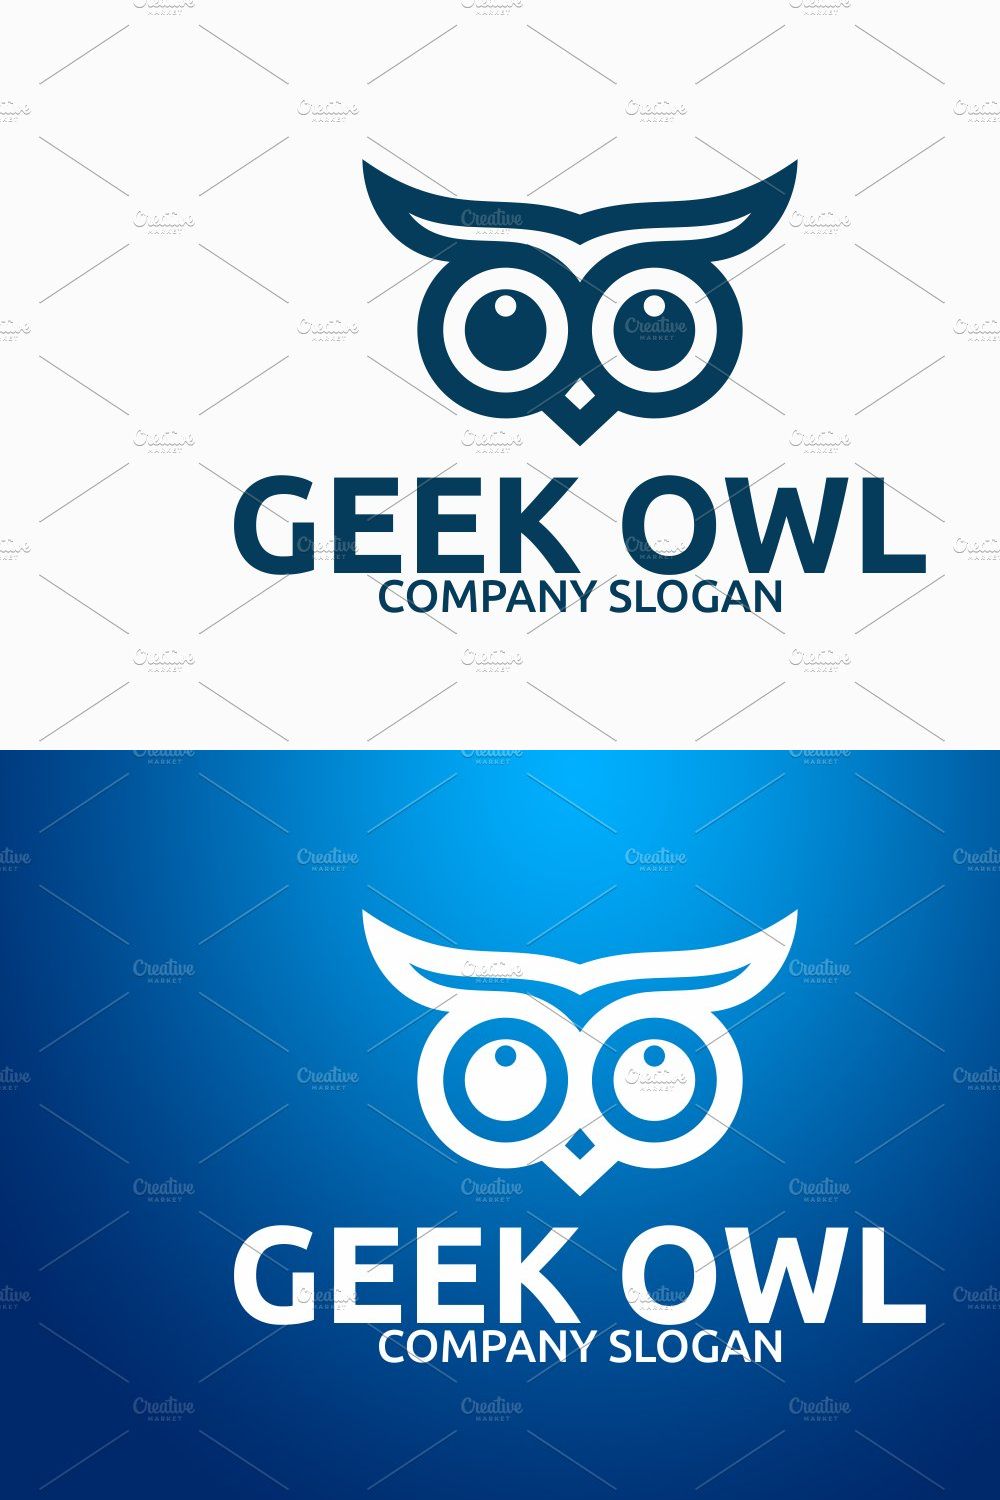 Geek Owl pinterest preview image.